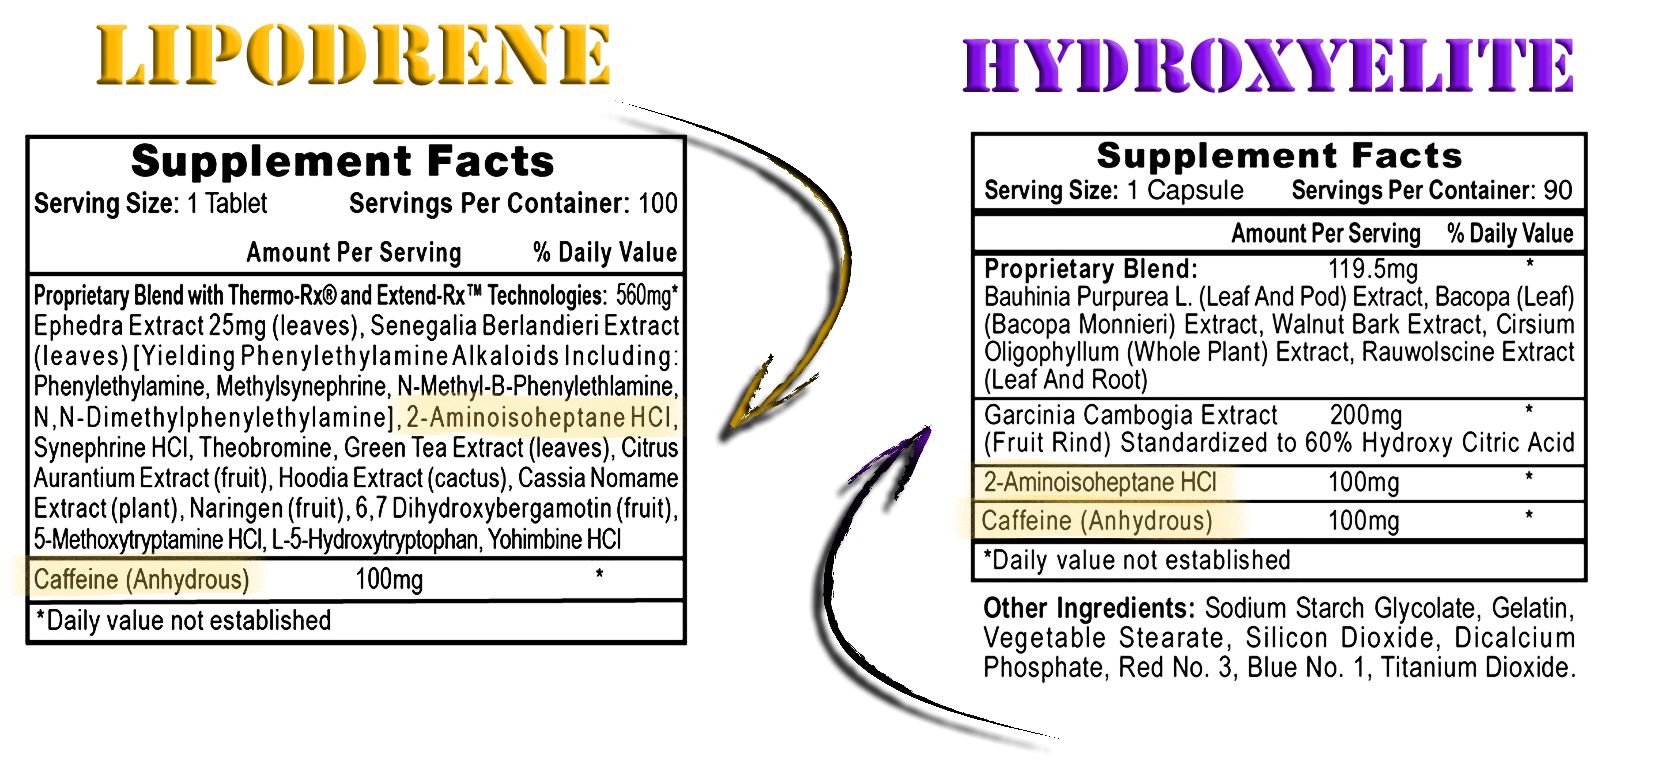 hydroxyelite-vs-LIPODRENE